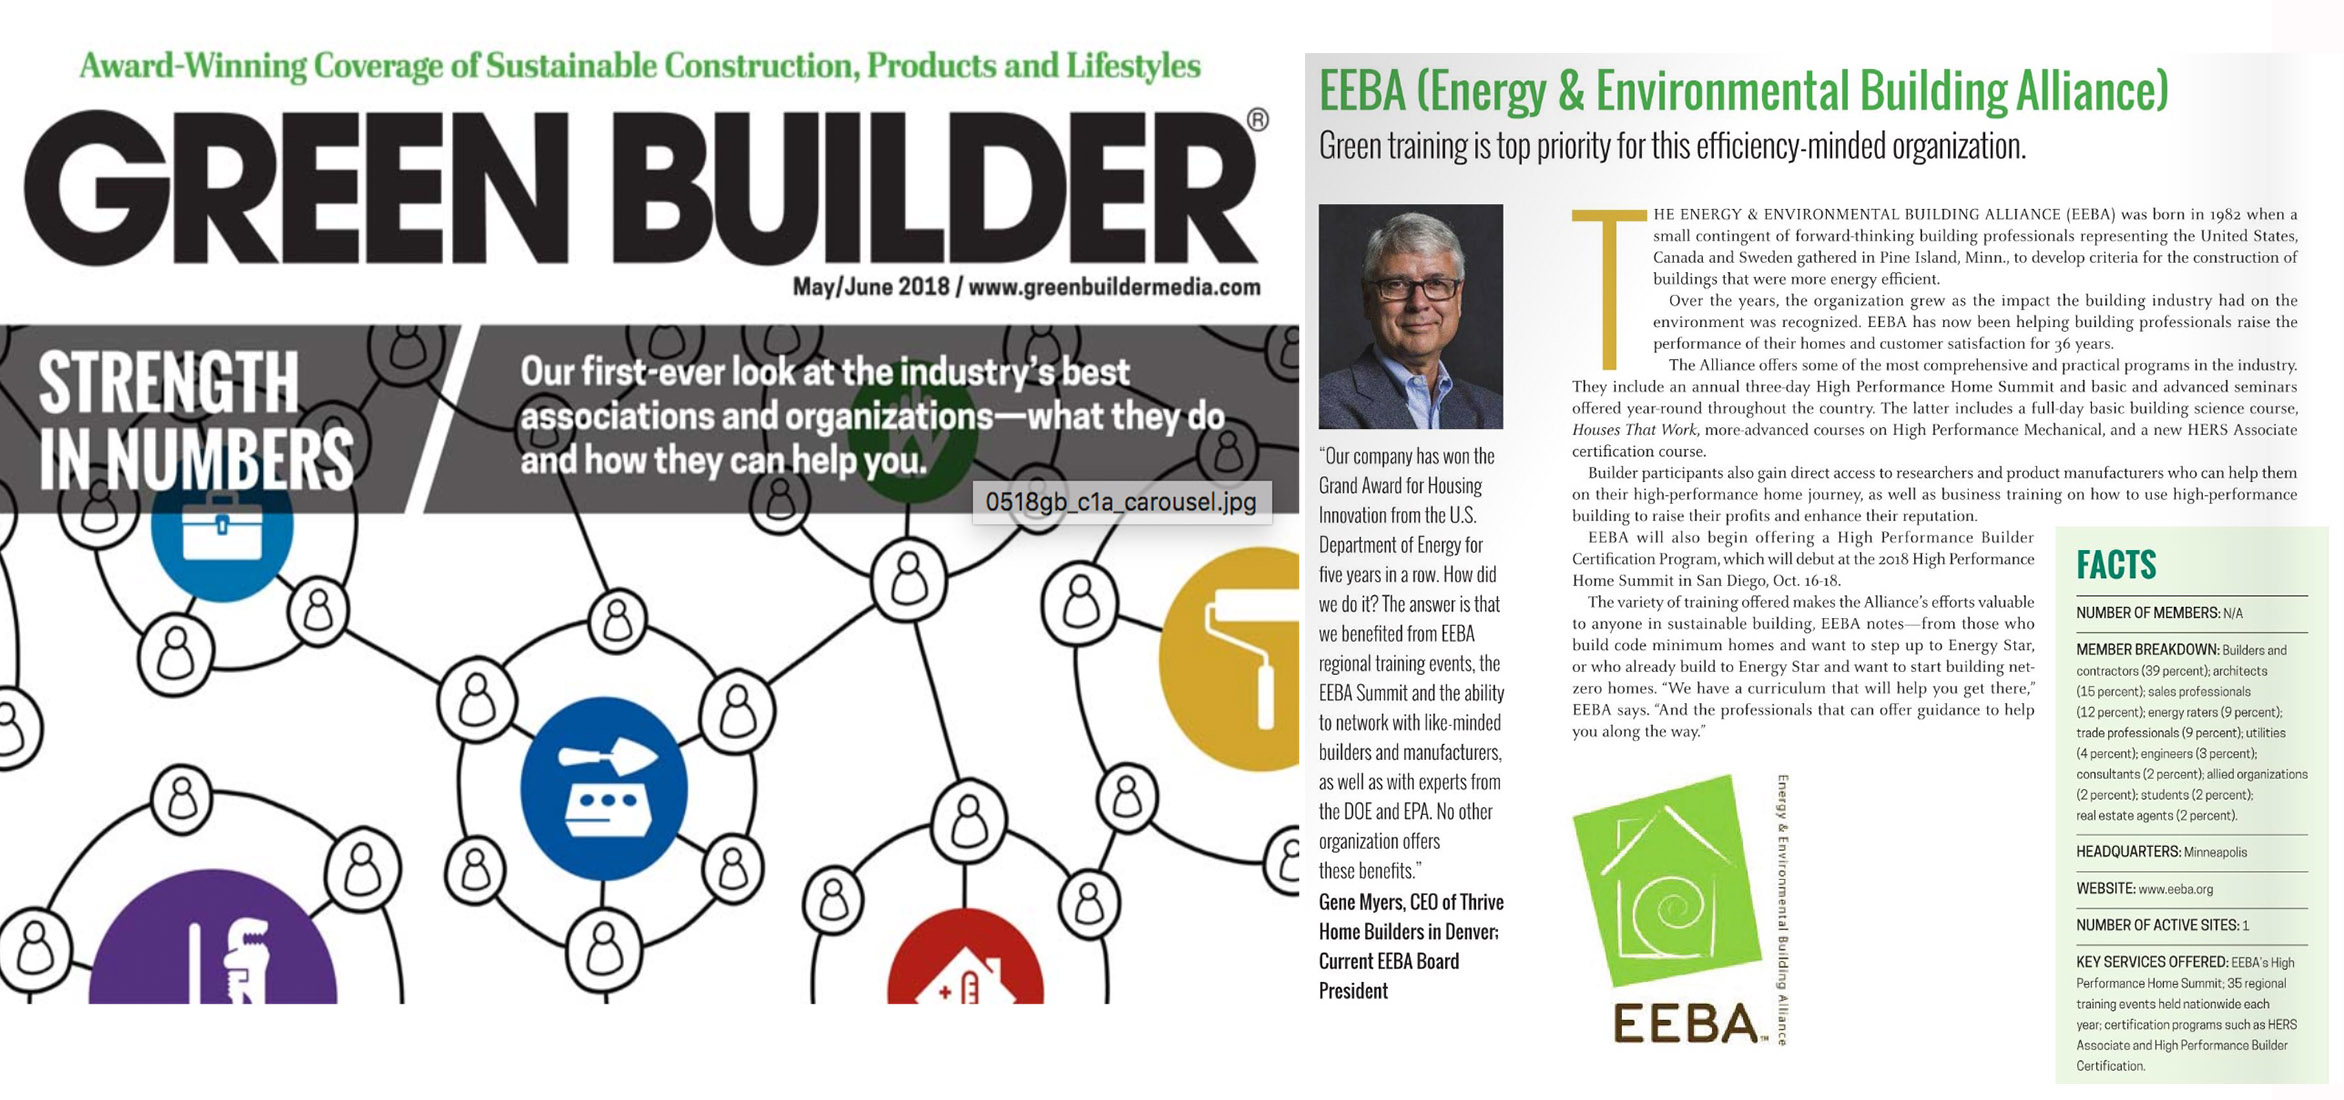 EEBA Named a Leading Industry Association